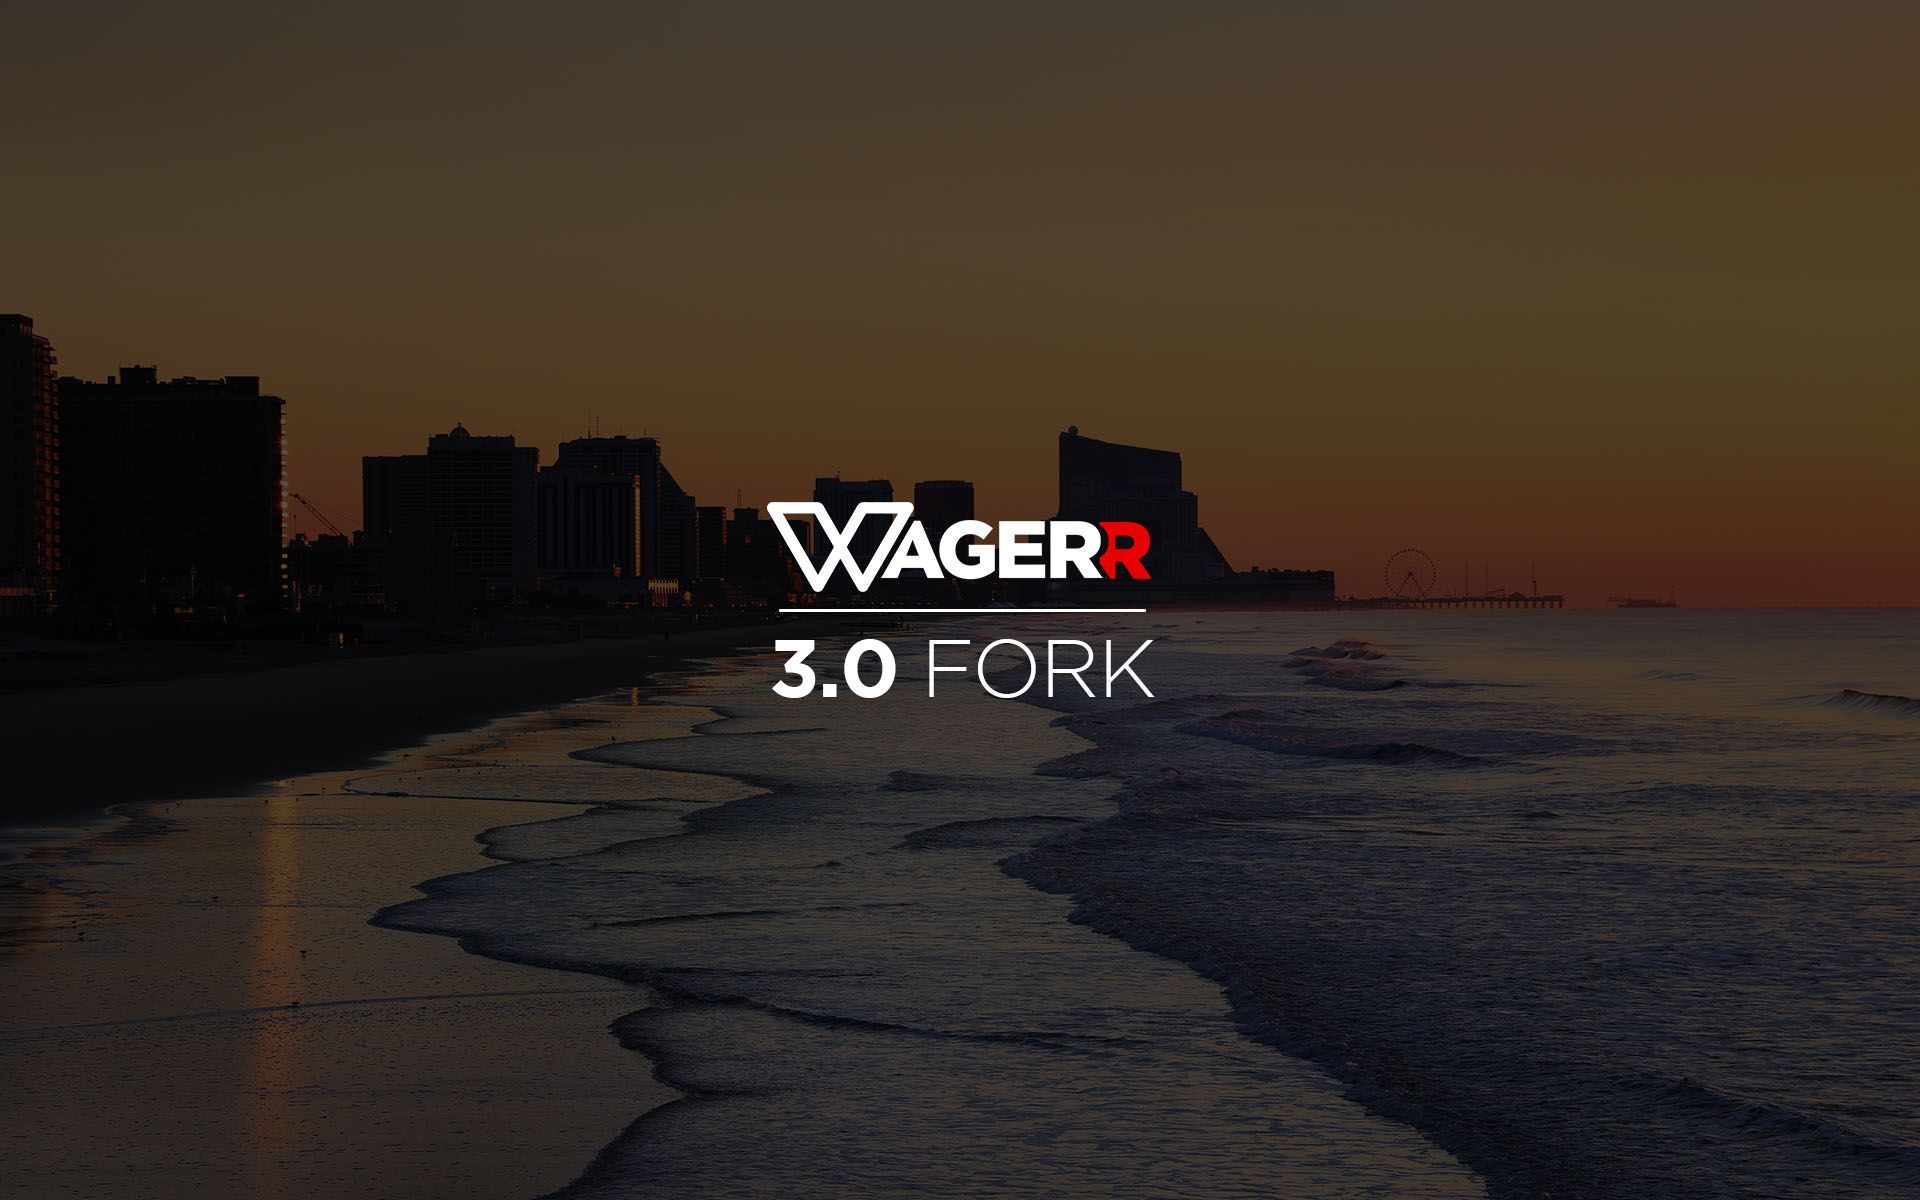 Wagerr 3.0 "Atlantic City" release